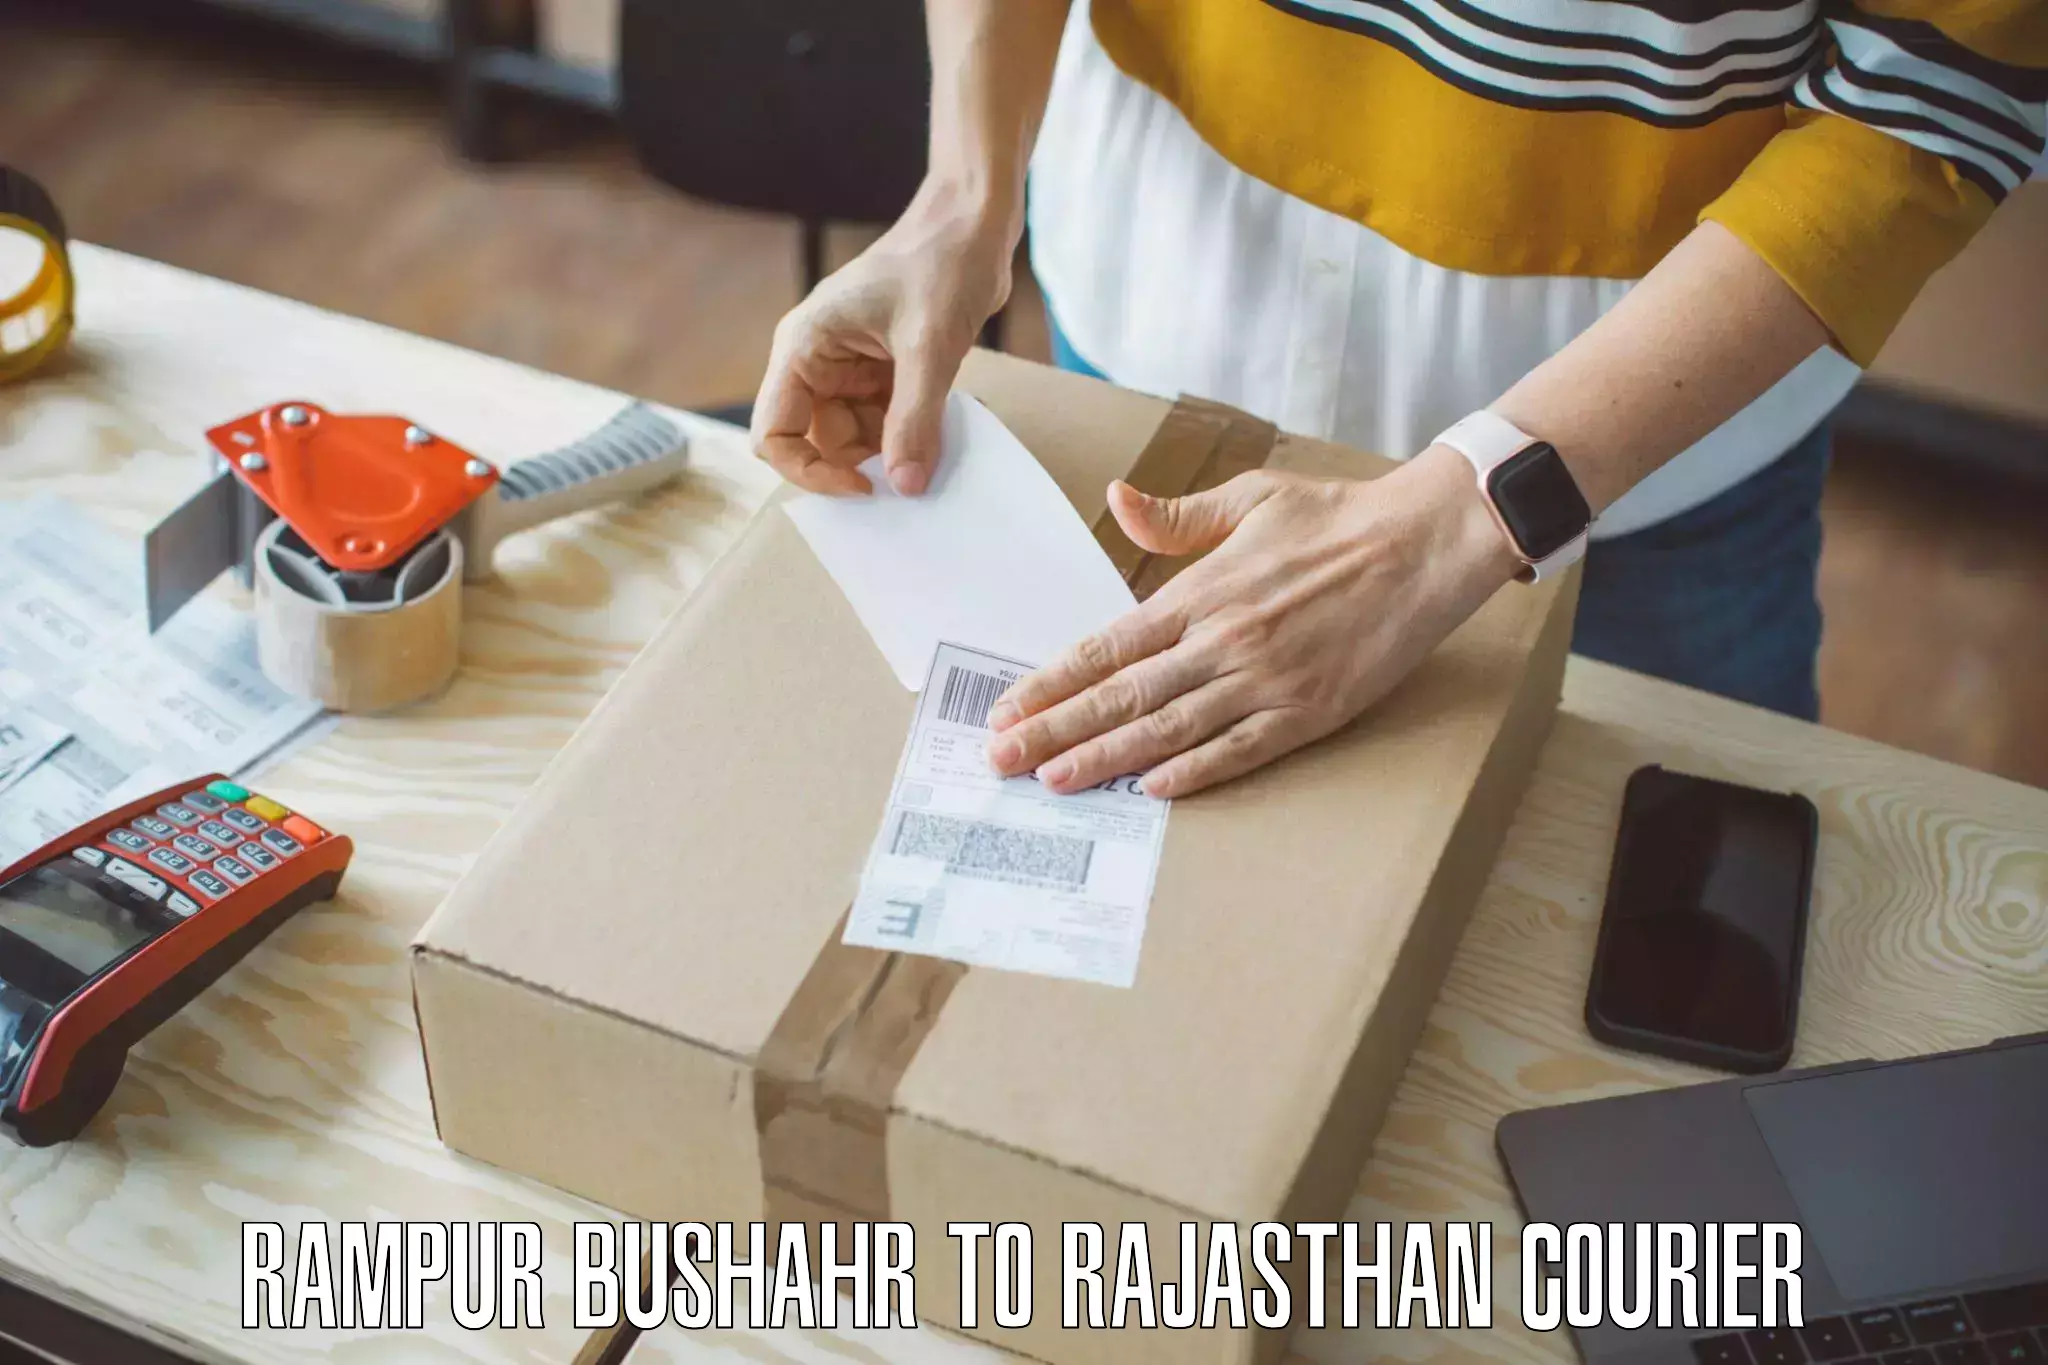 Efficient moving company Rampur Bushahr to Sardarshahr